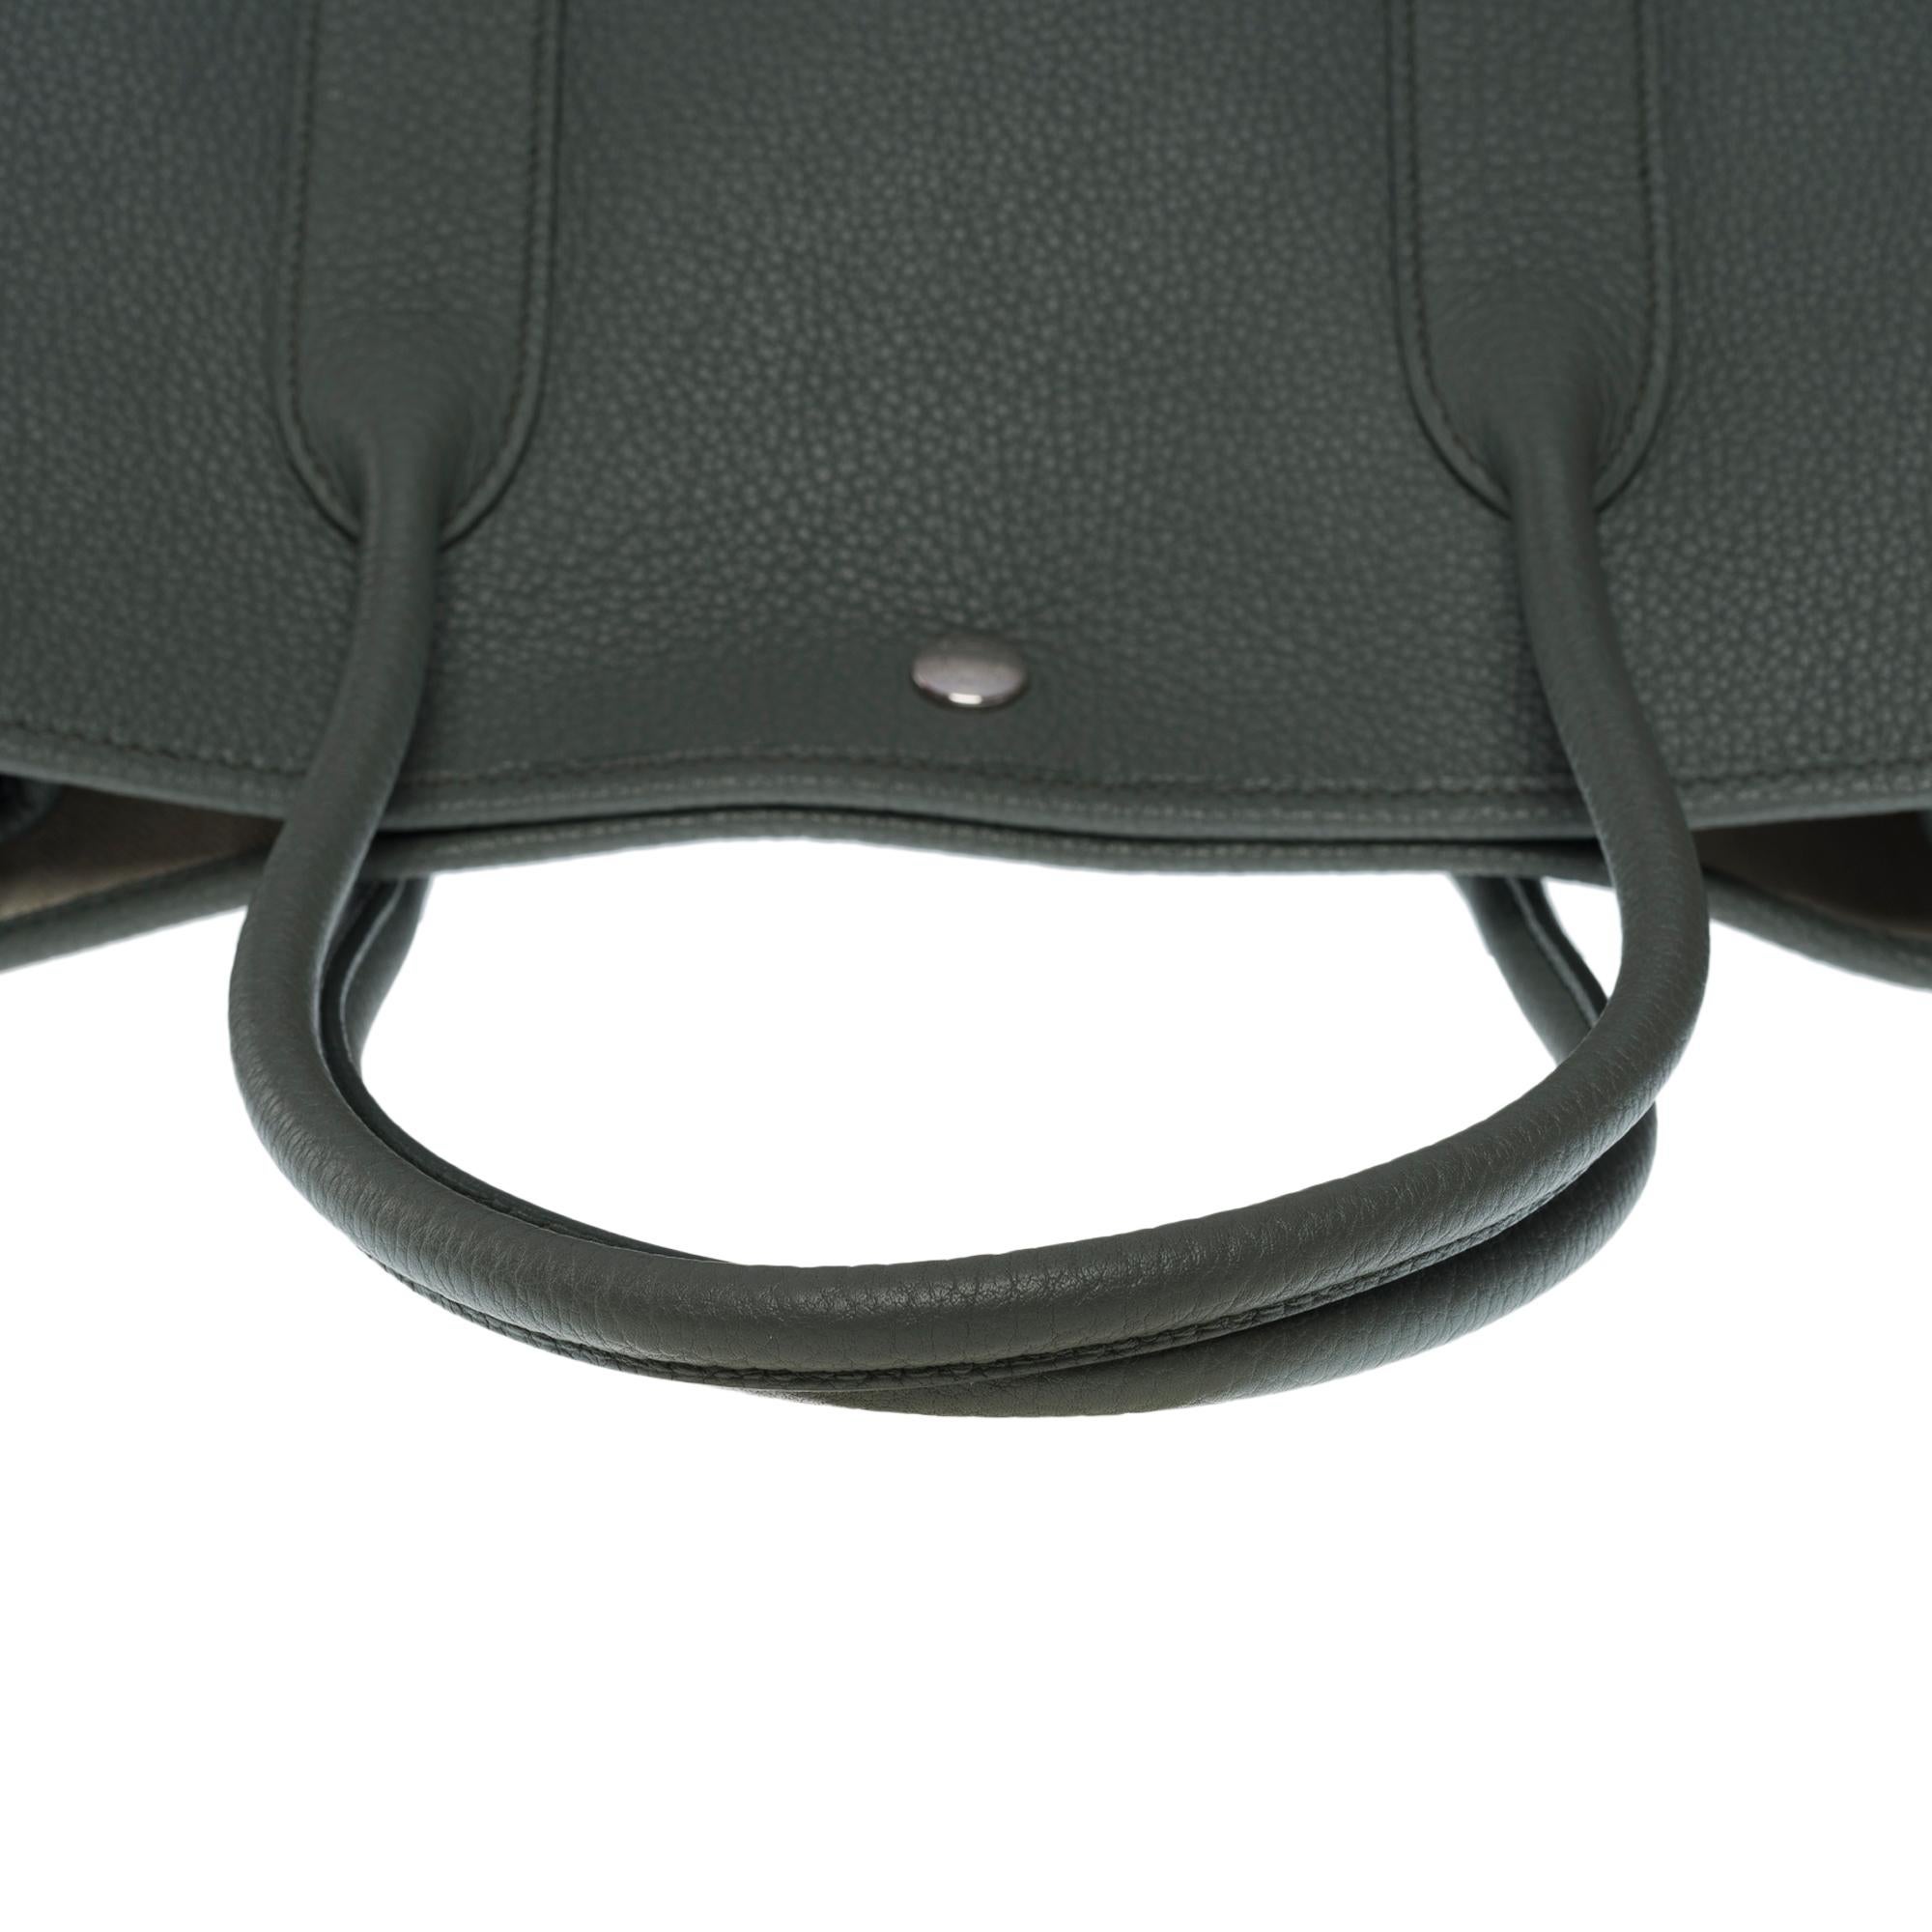 Gorgeous Hermès Garden Party 36 Tote bag in green Almond Negonda leather, SHW 5